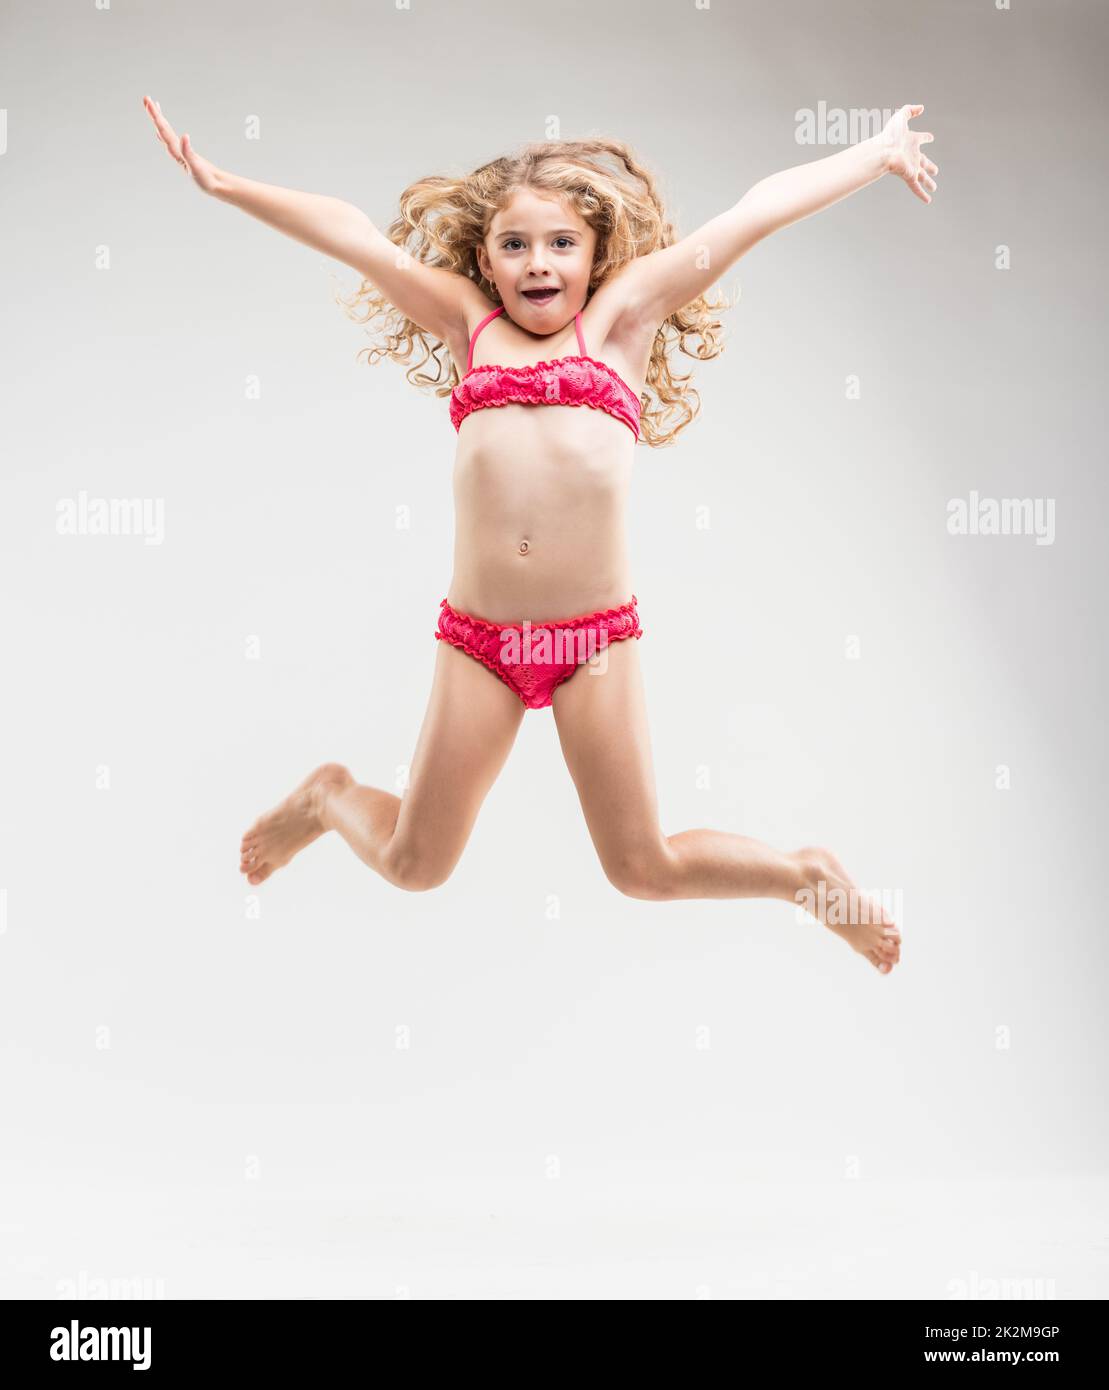 Teen girls bikini hi-res stock photography and images - Alamy